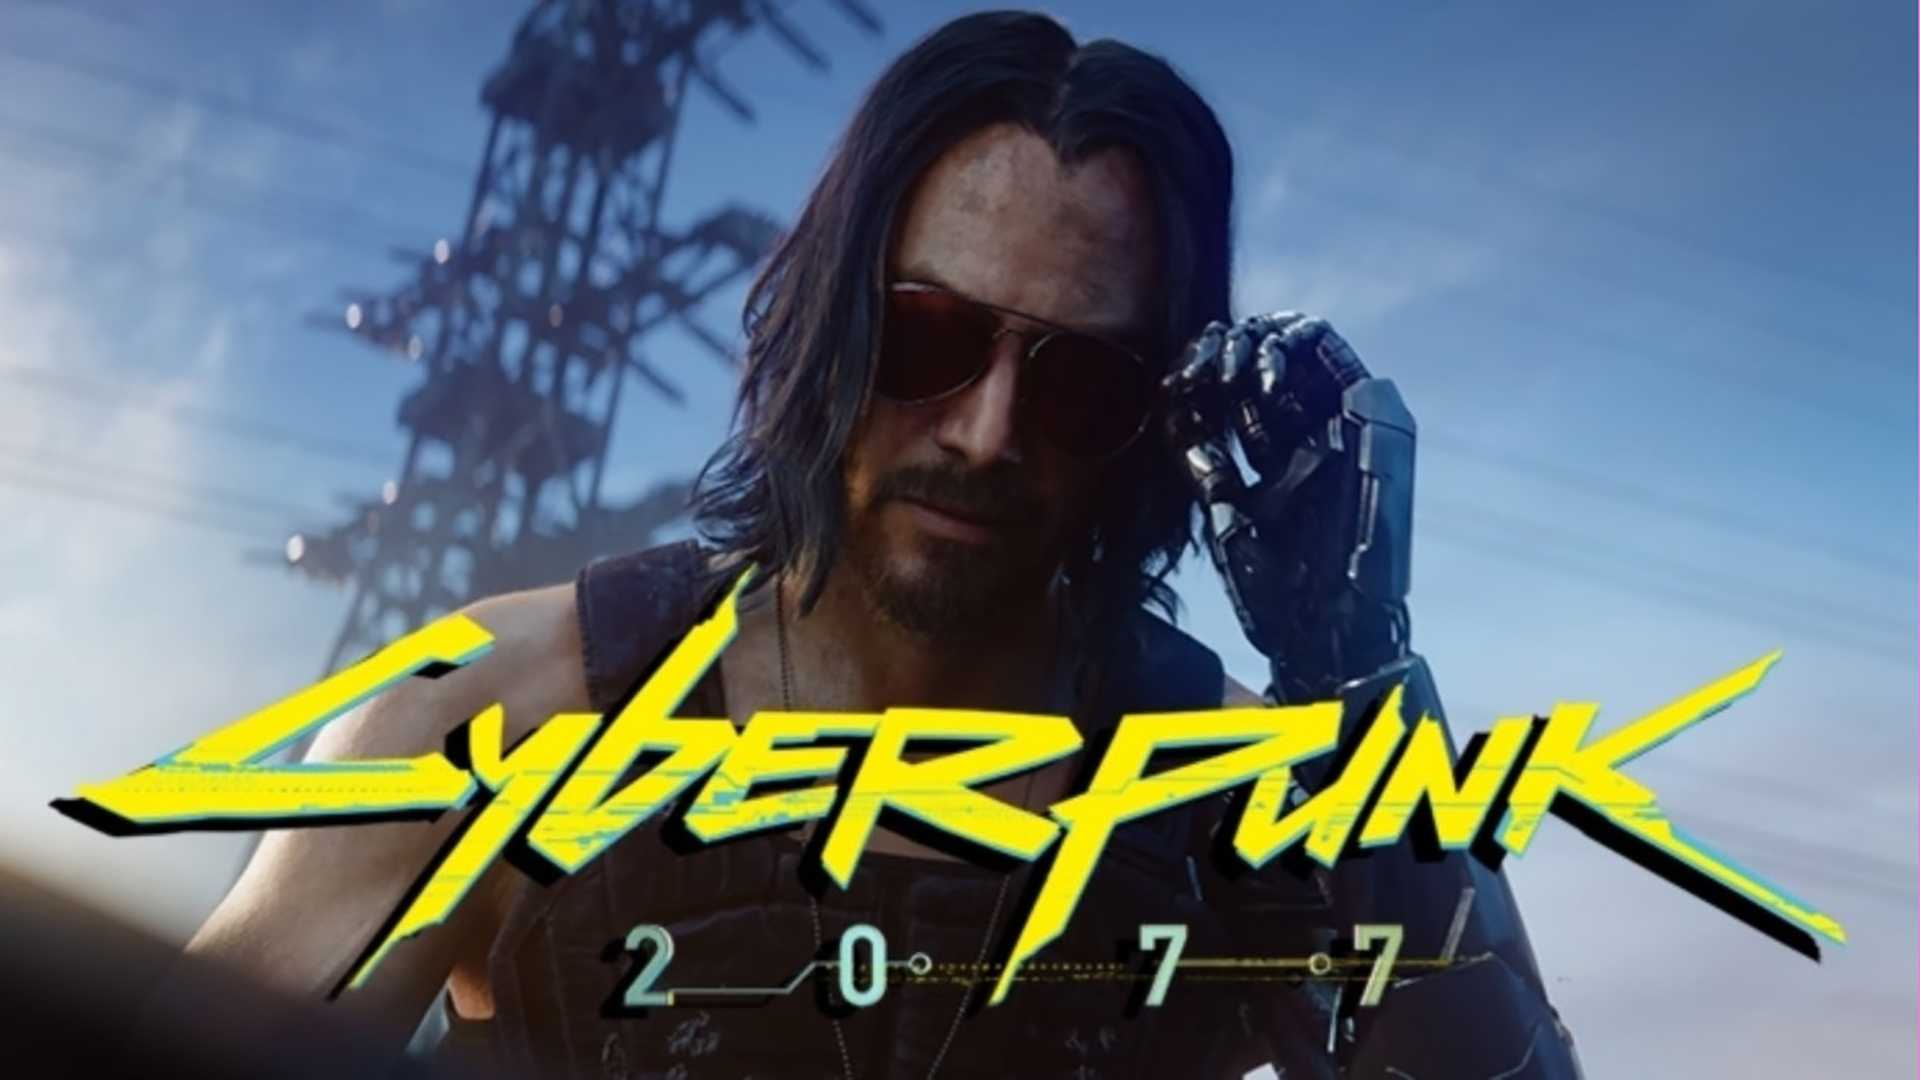 Cyberpunk 2077 - Keanu Reeves